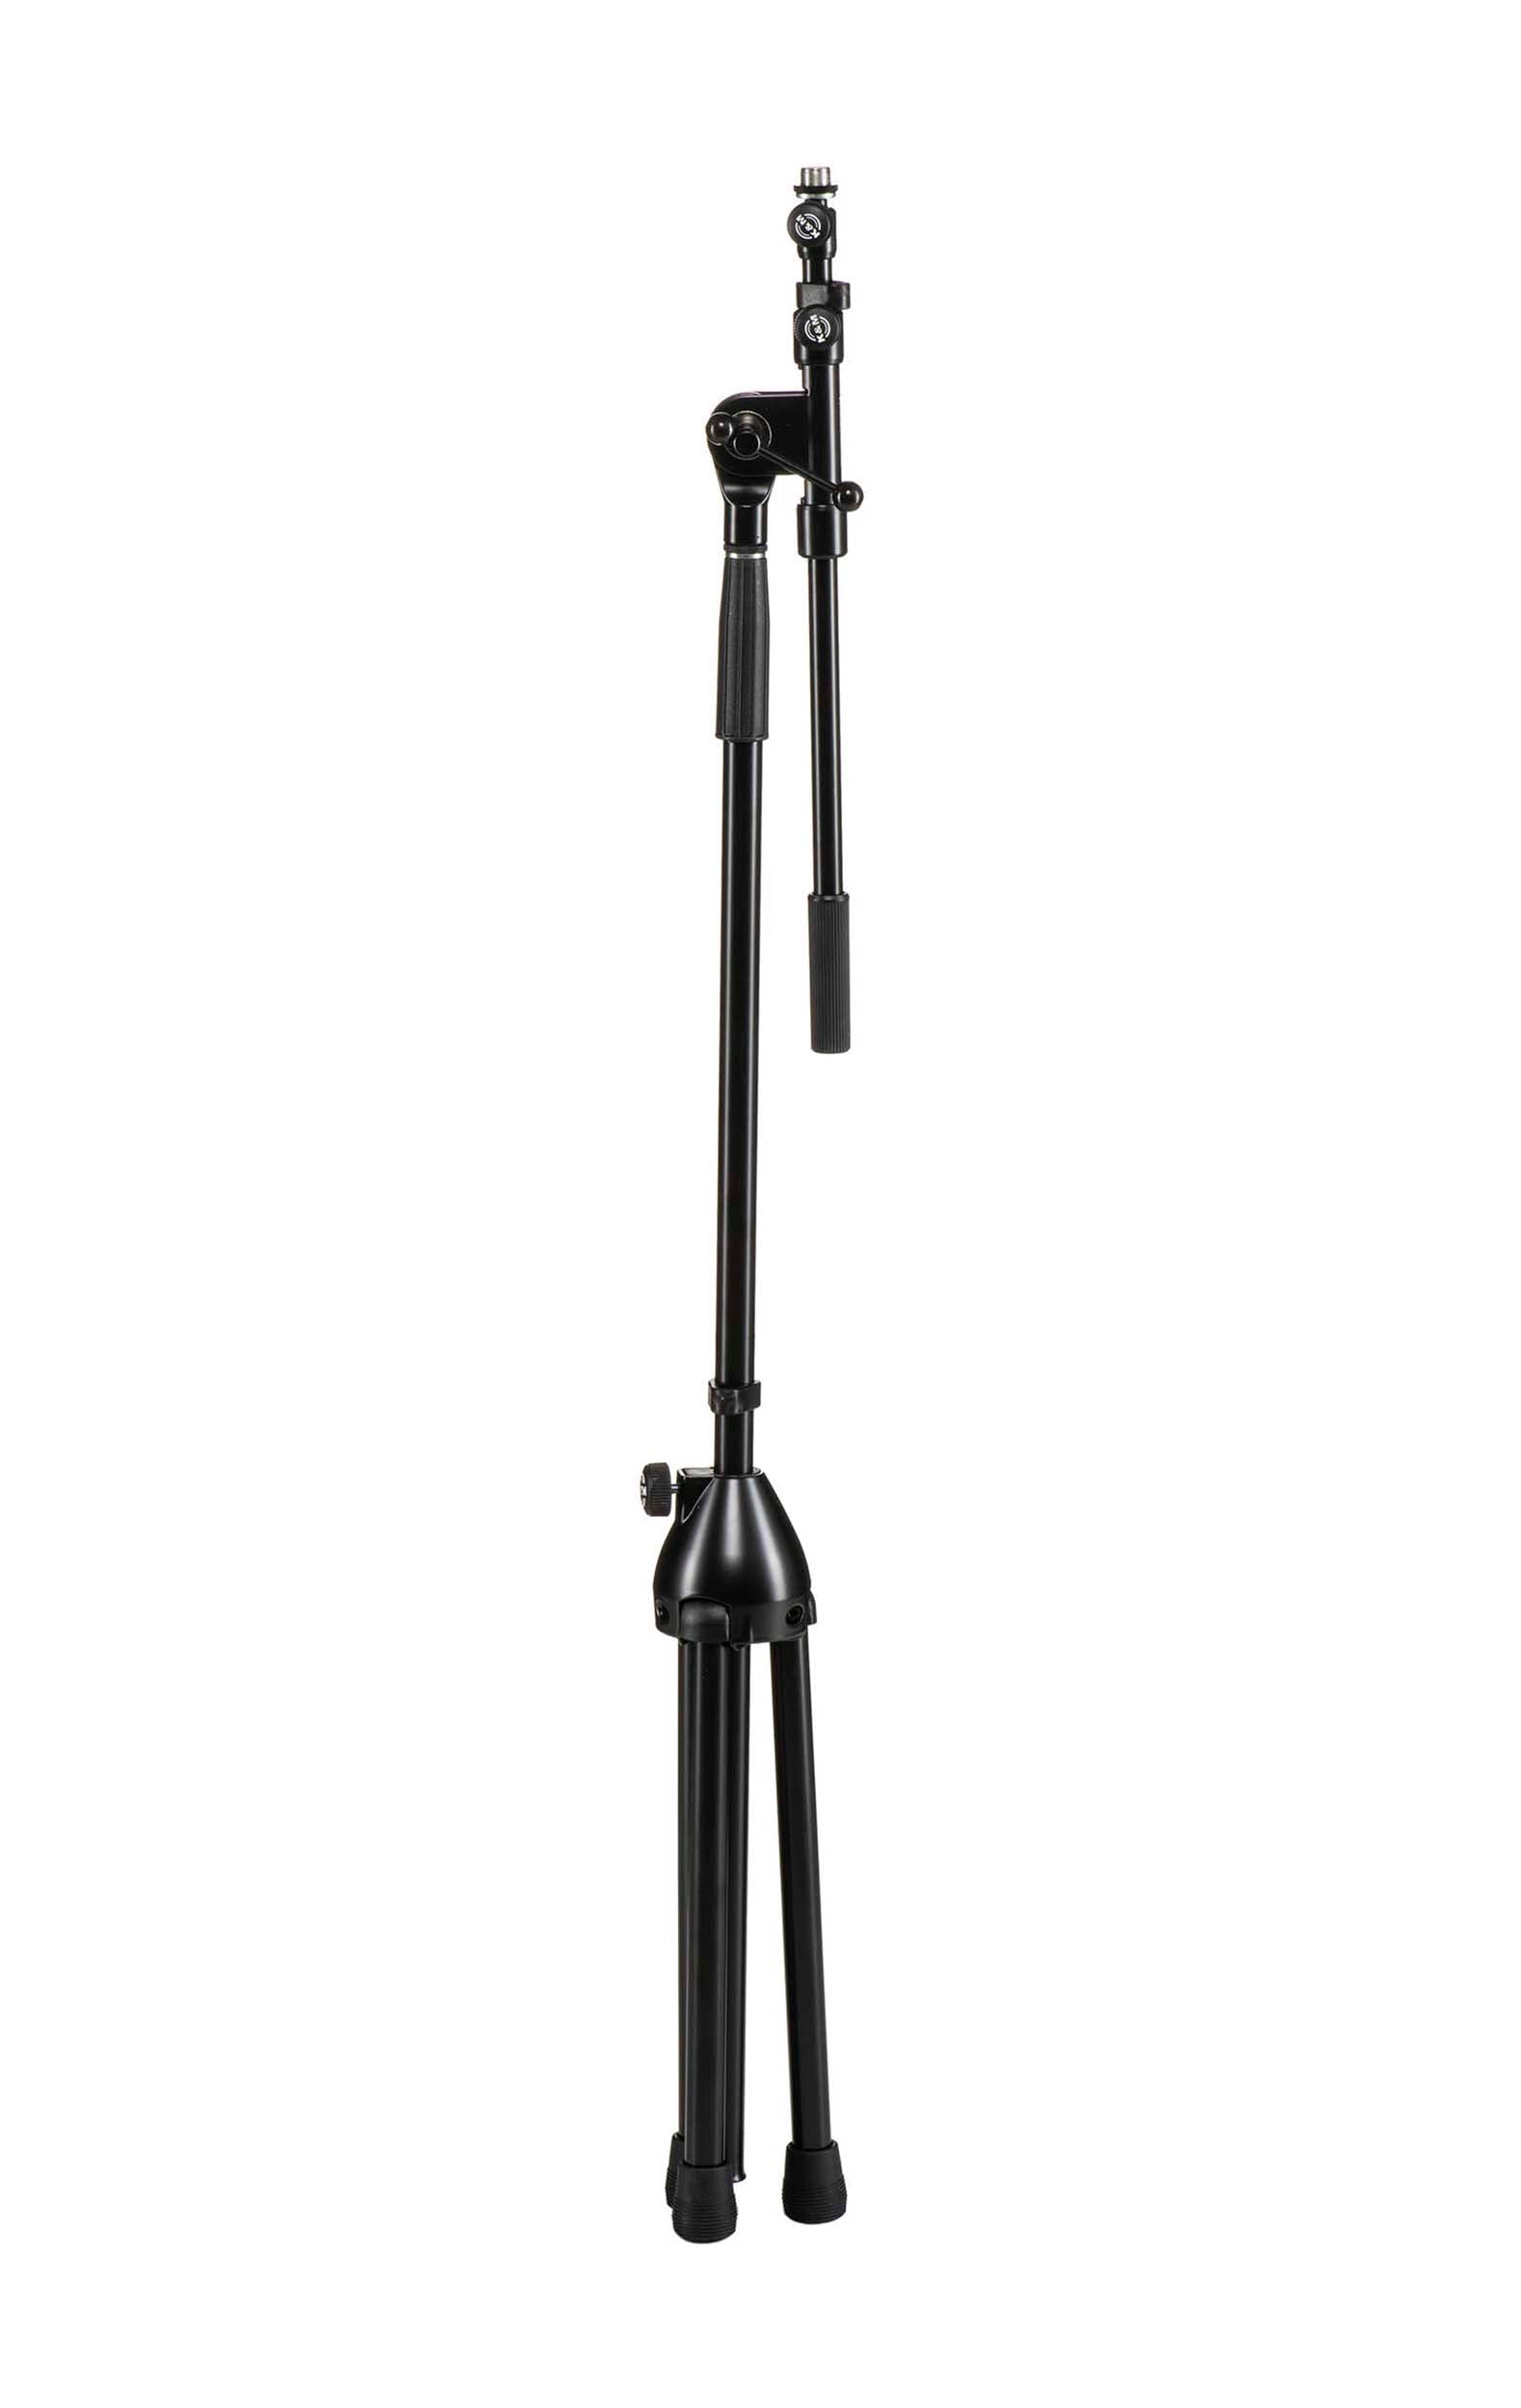 B-Stock: K&M Telescoping Boom Microphone Stand - Black by K&M